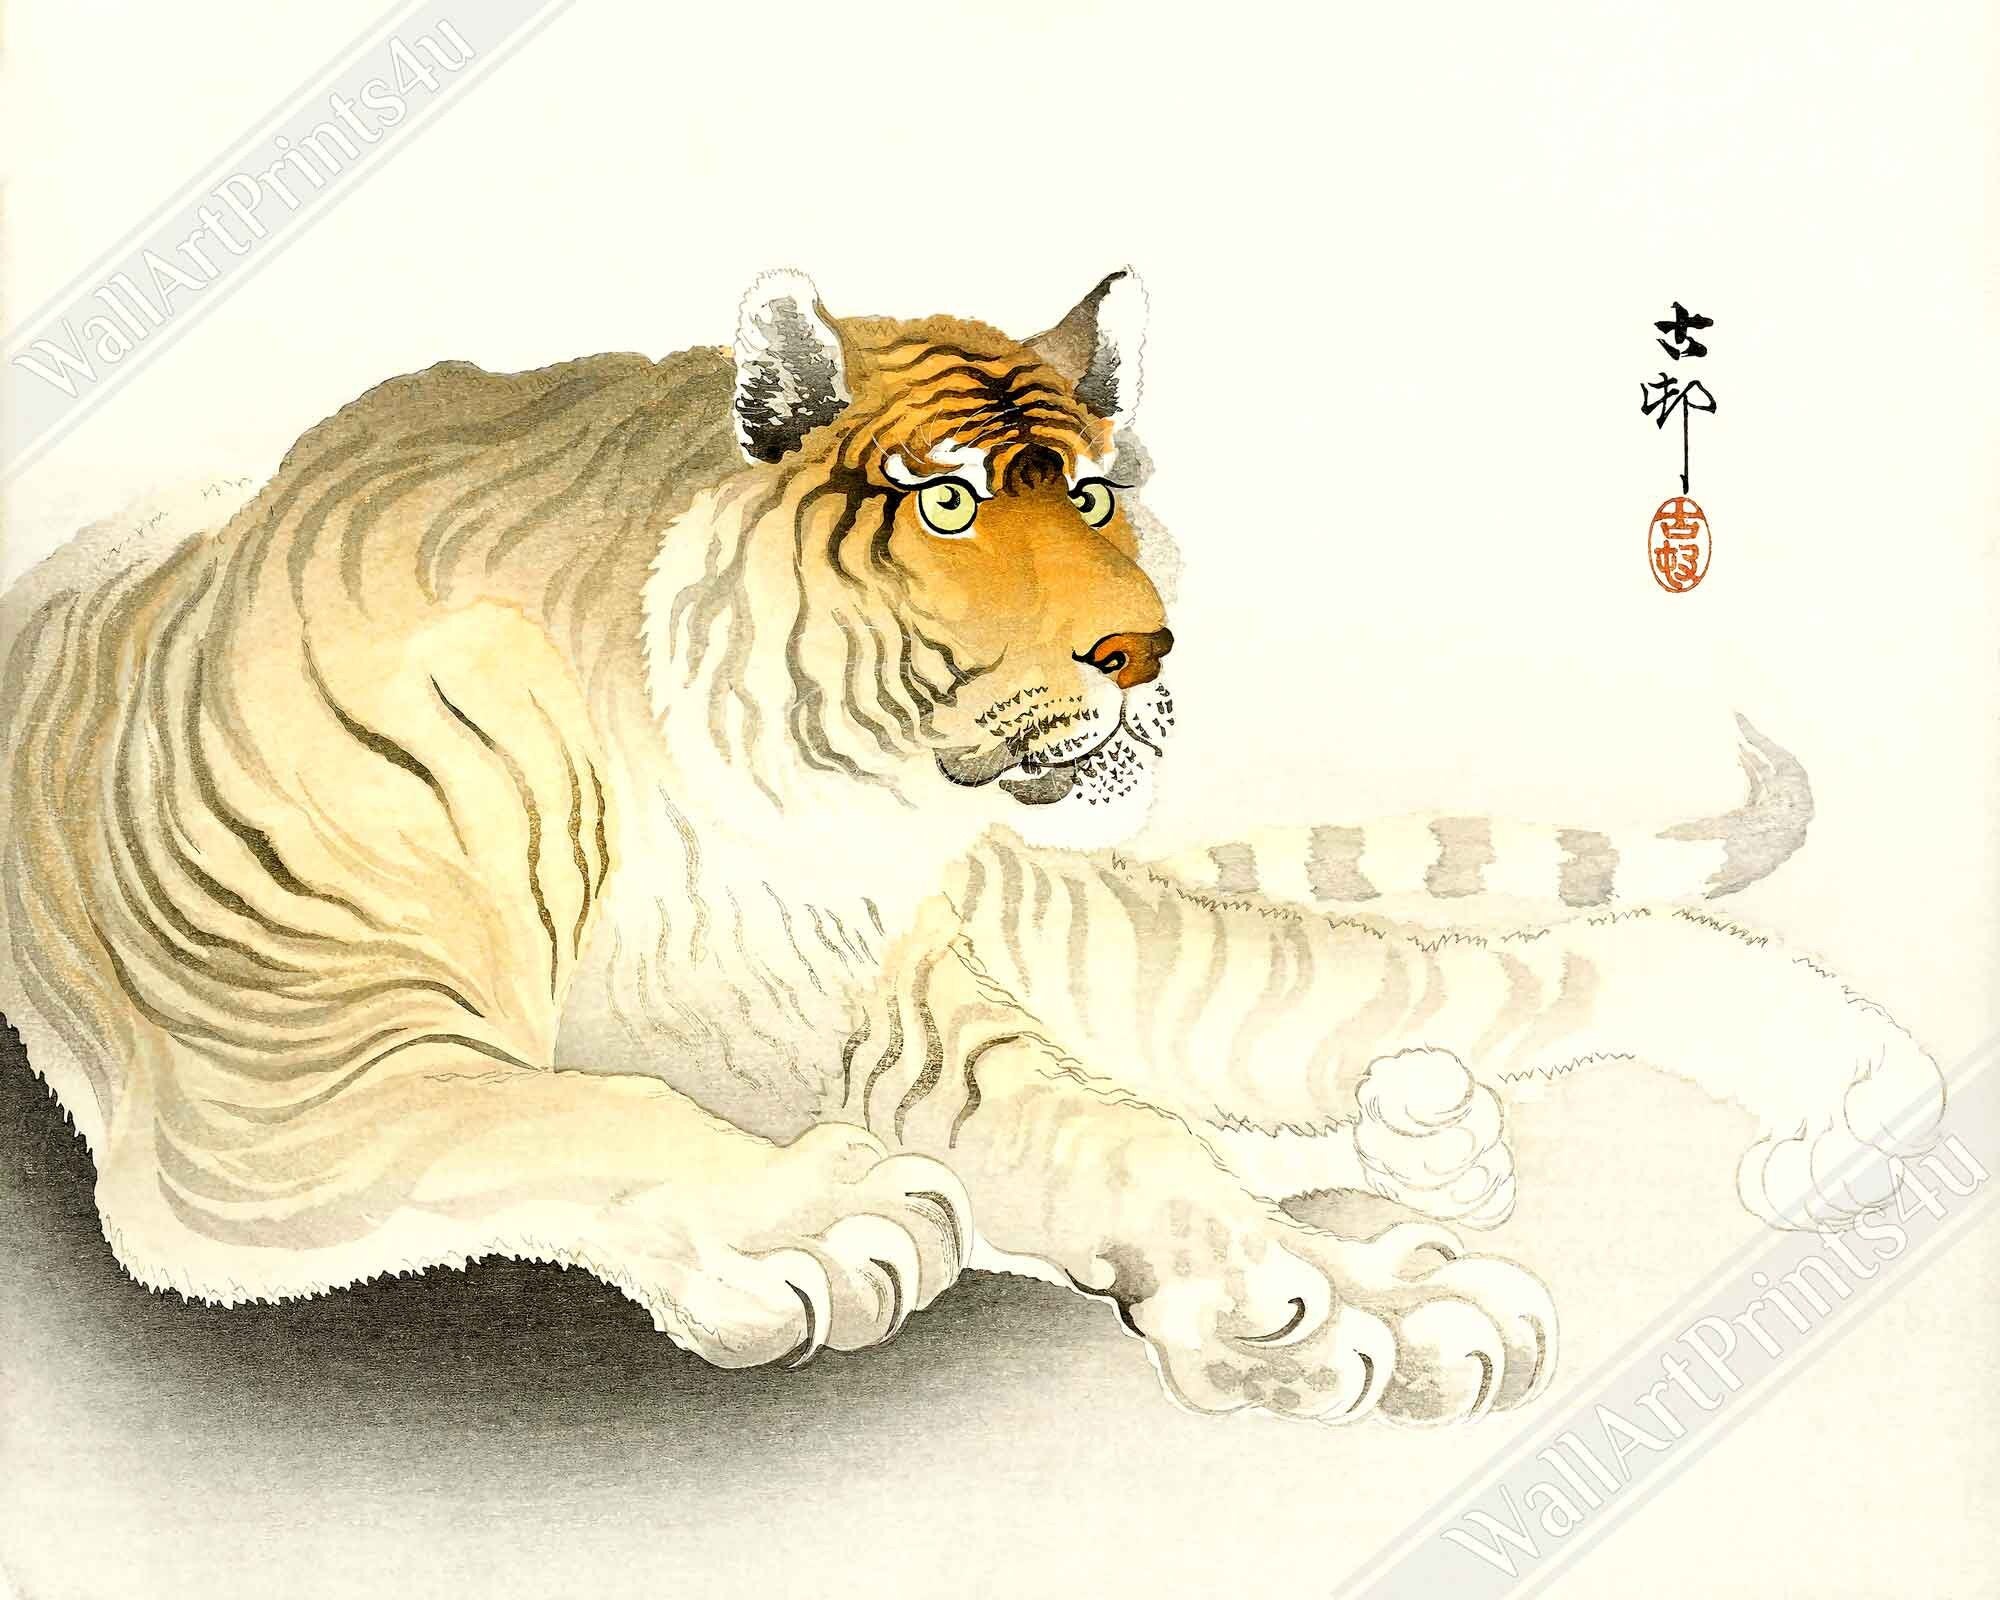 Tiger Poster Print, Ohara Koson, Japanese Tiger Art - Vintage Tiger Print Poster - WallArtPrints4U